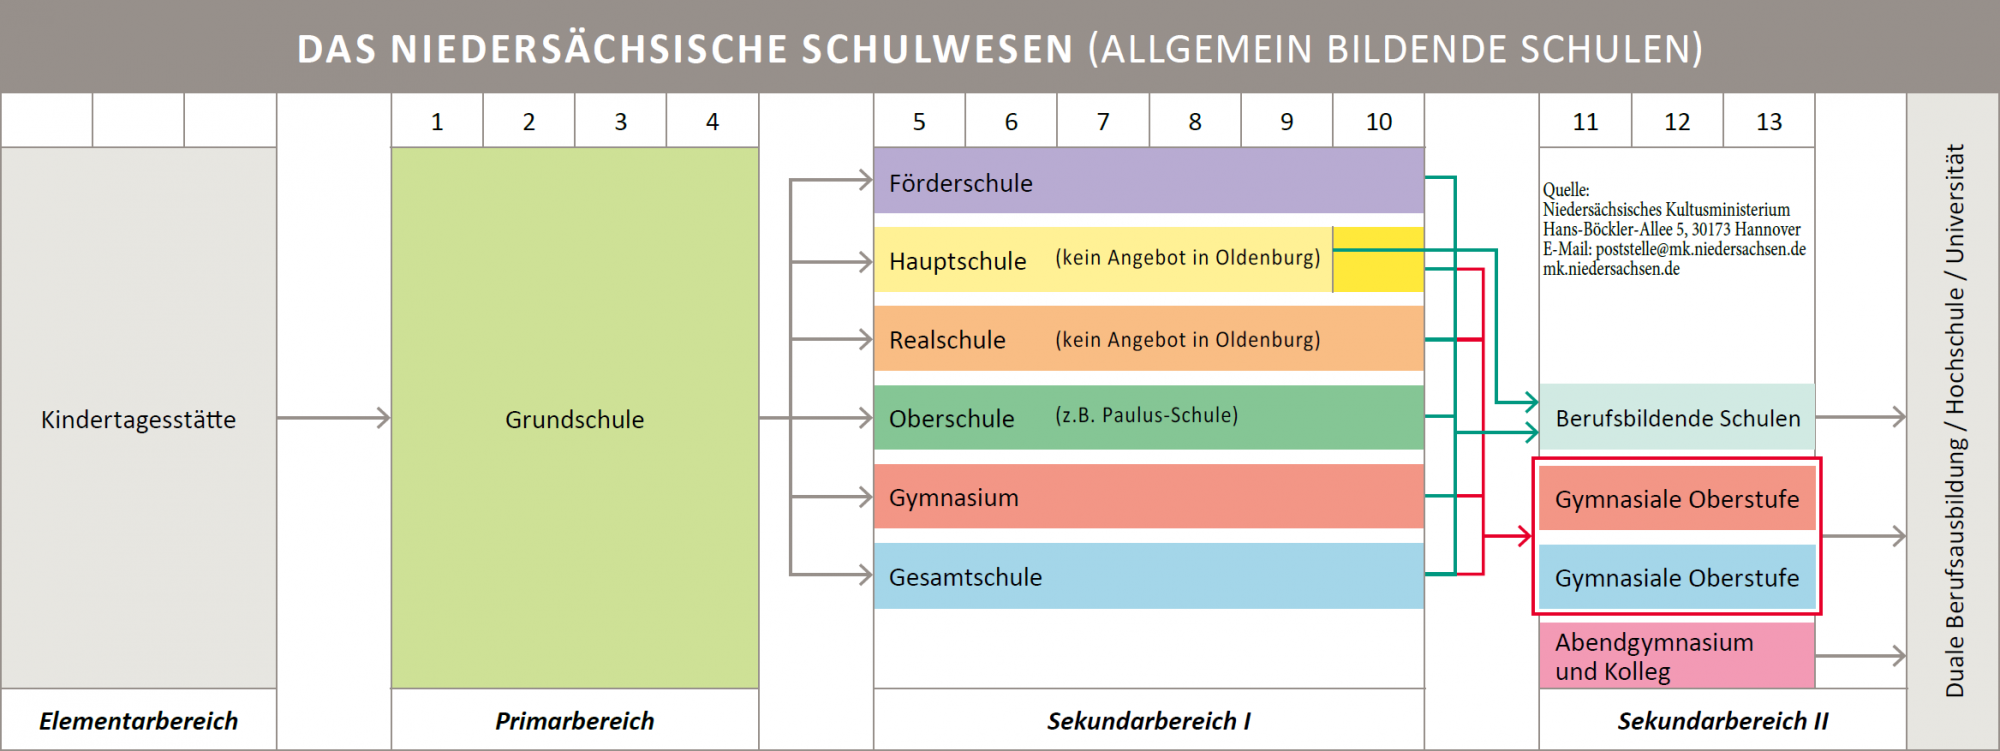 Schulwesen in Niedersachsen (Stand 2020)